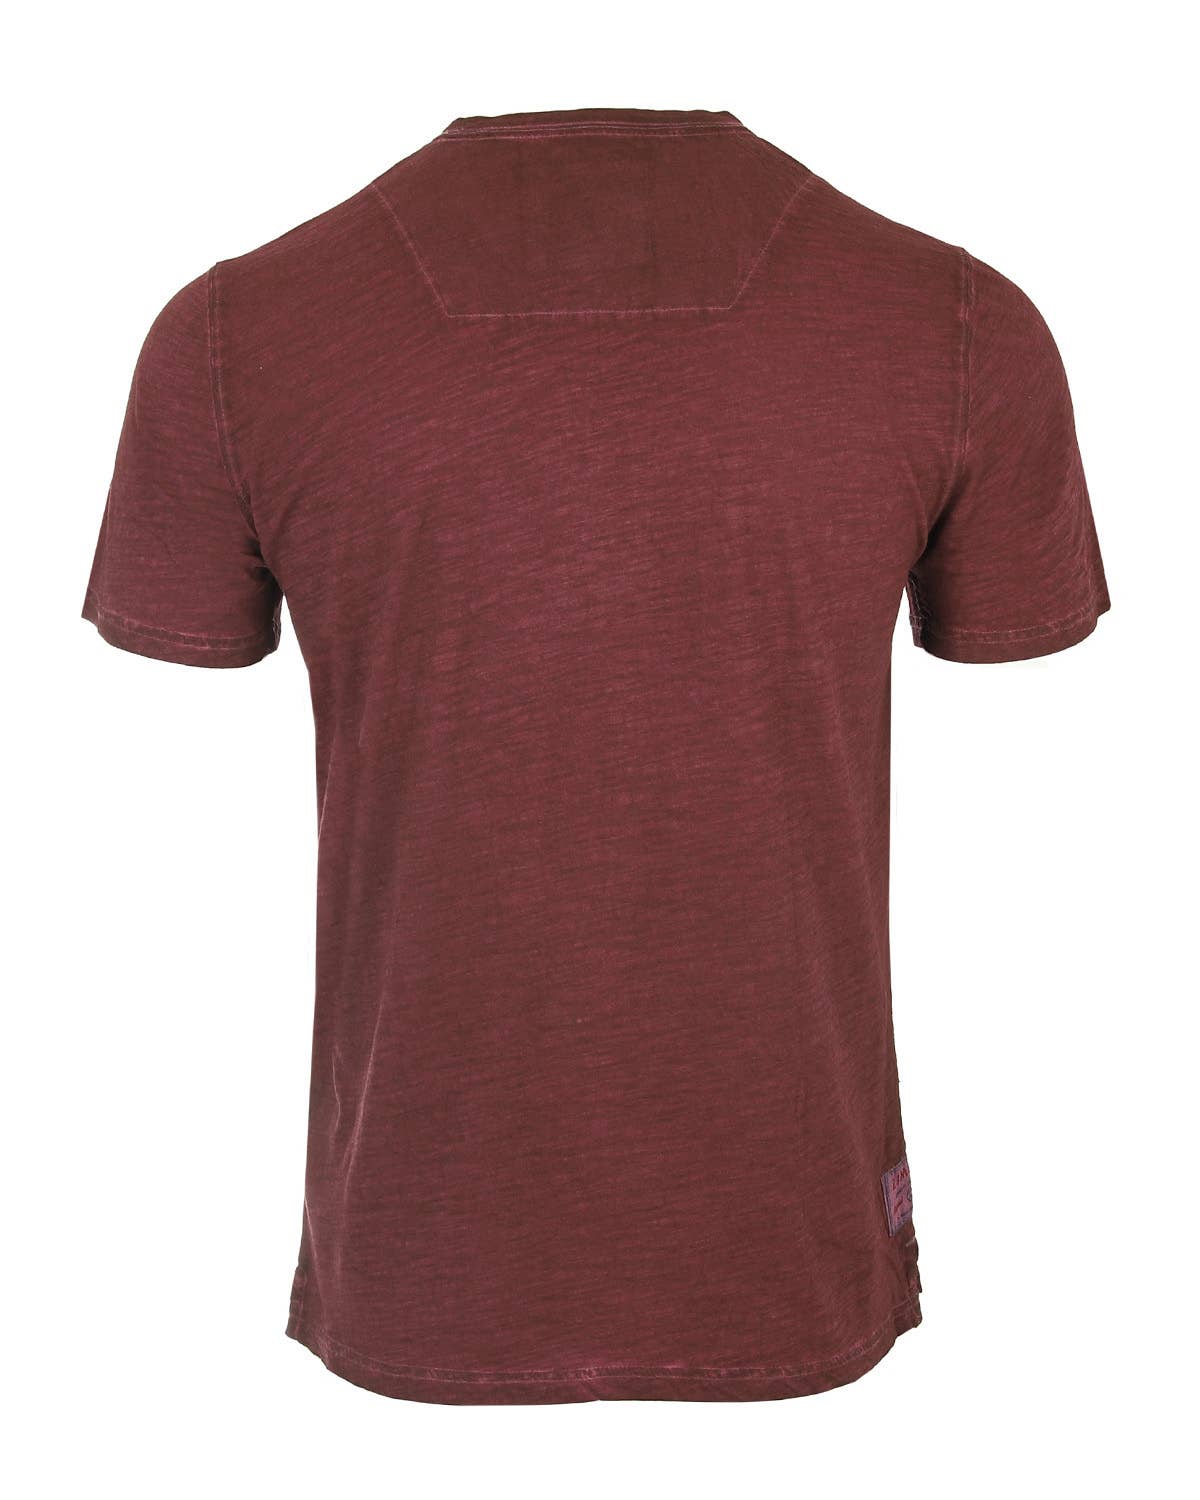 Short Sleeve Color Garment Dyed Henley Shirt: Maroon